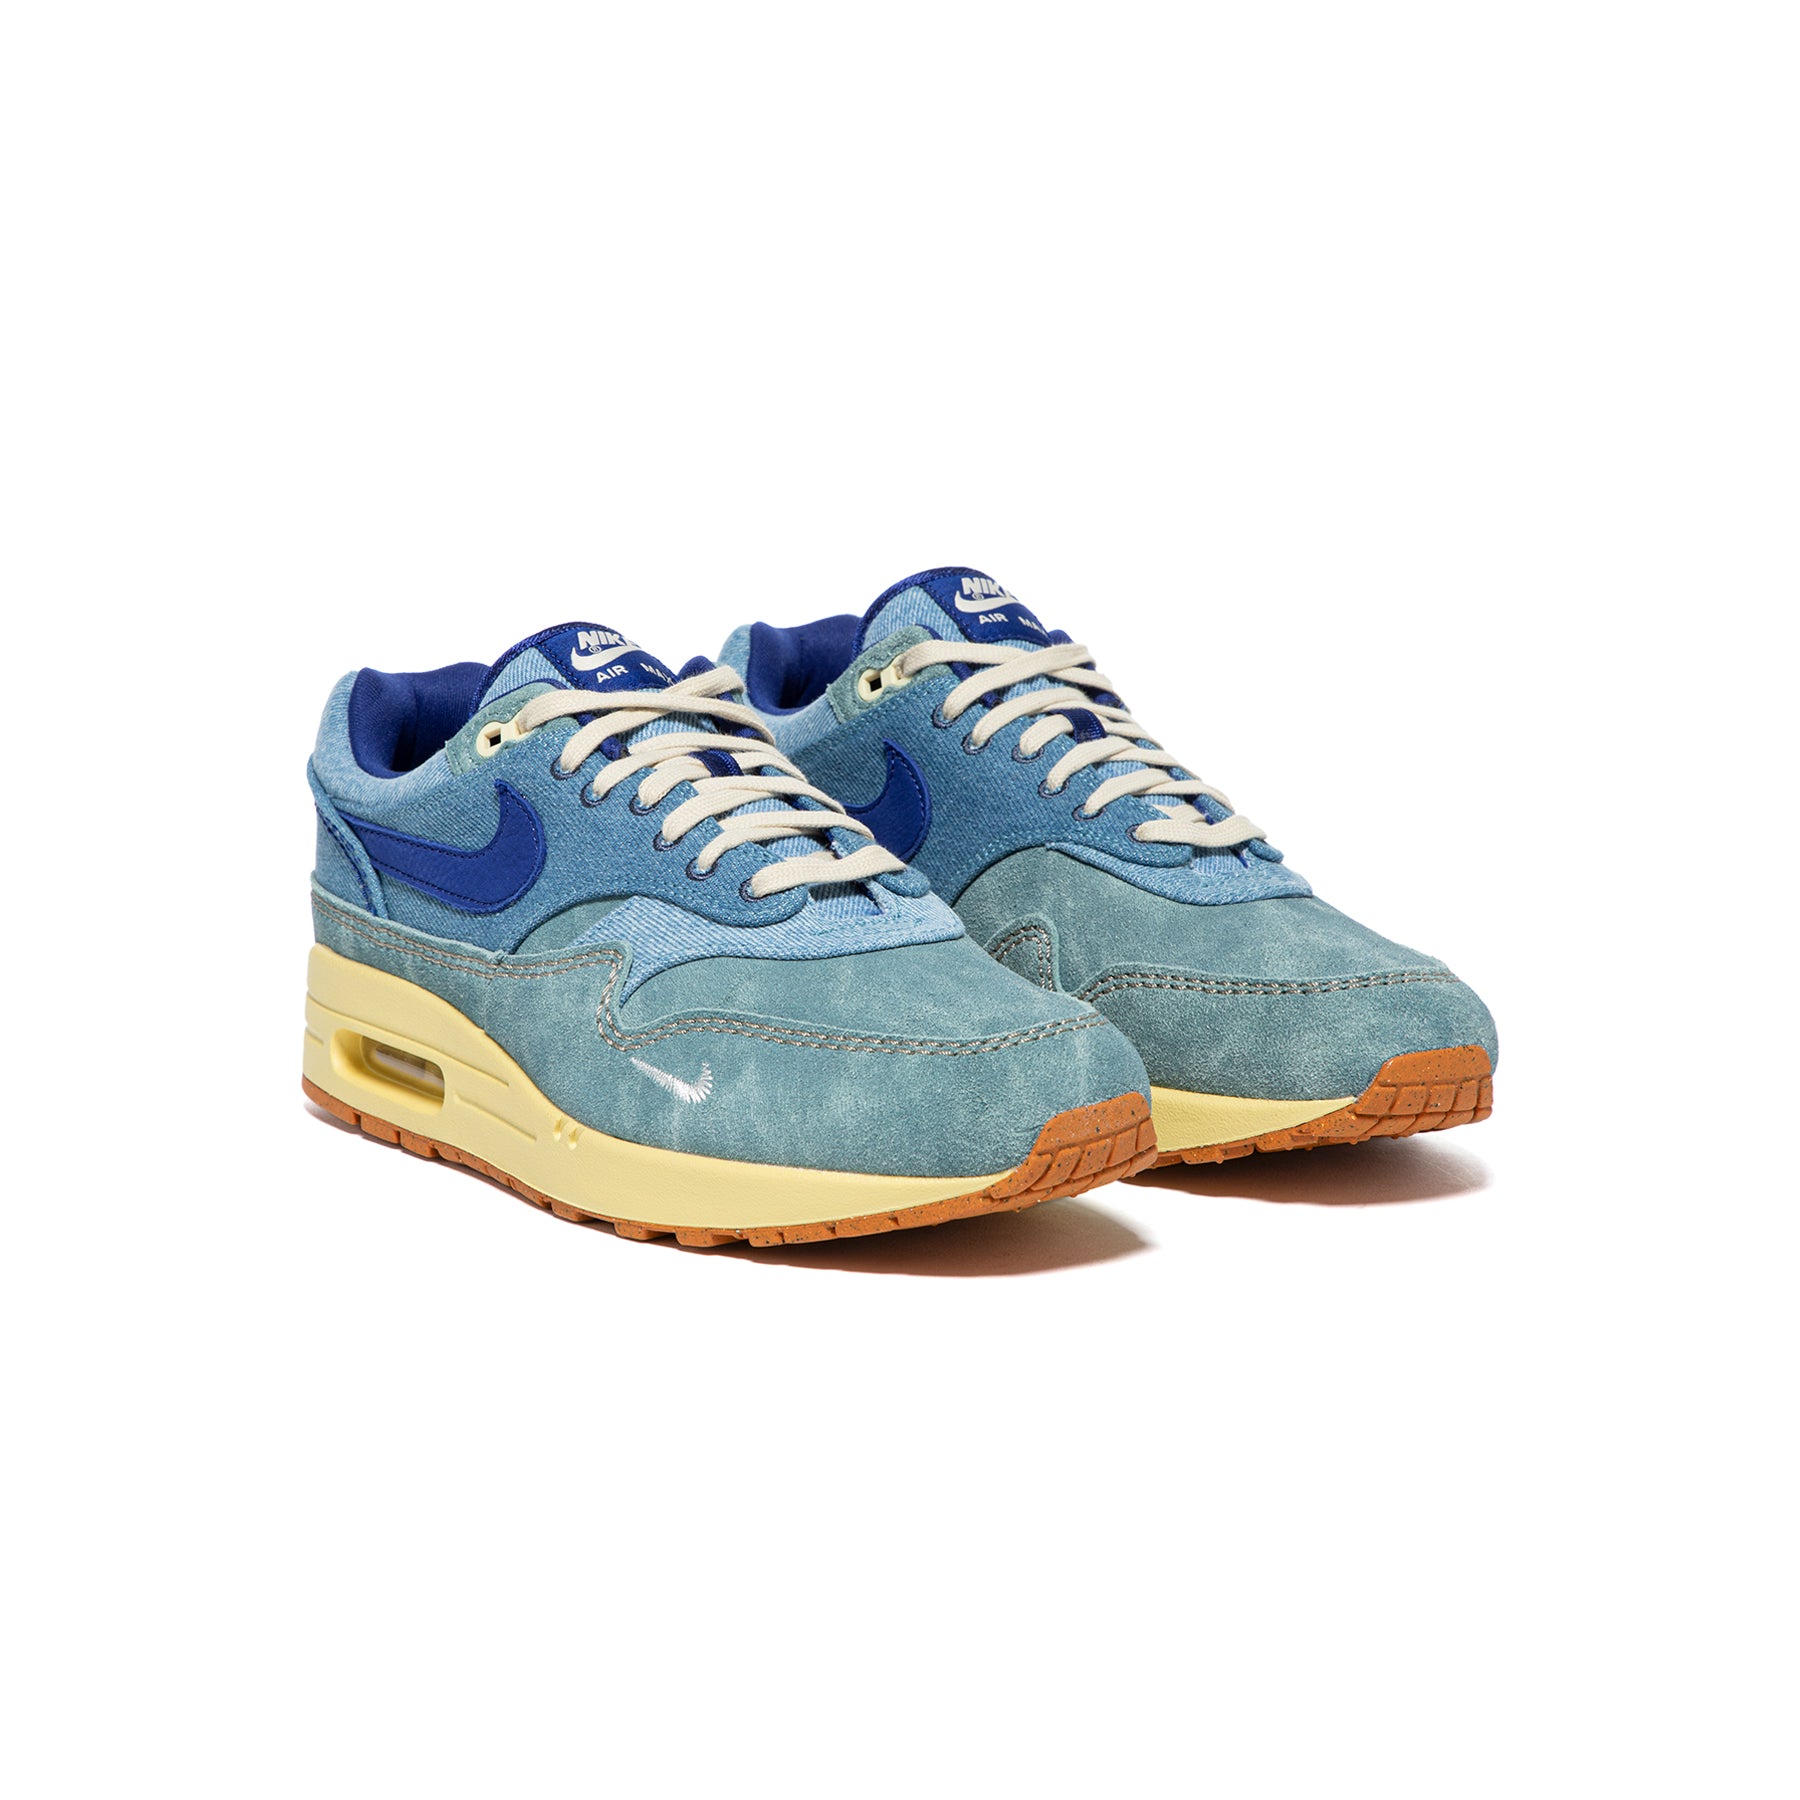 Men's shoes Nike Air Max 1 Premium Mineral Slate/ Deep Royal Blue